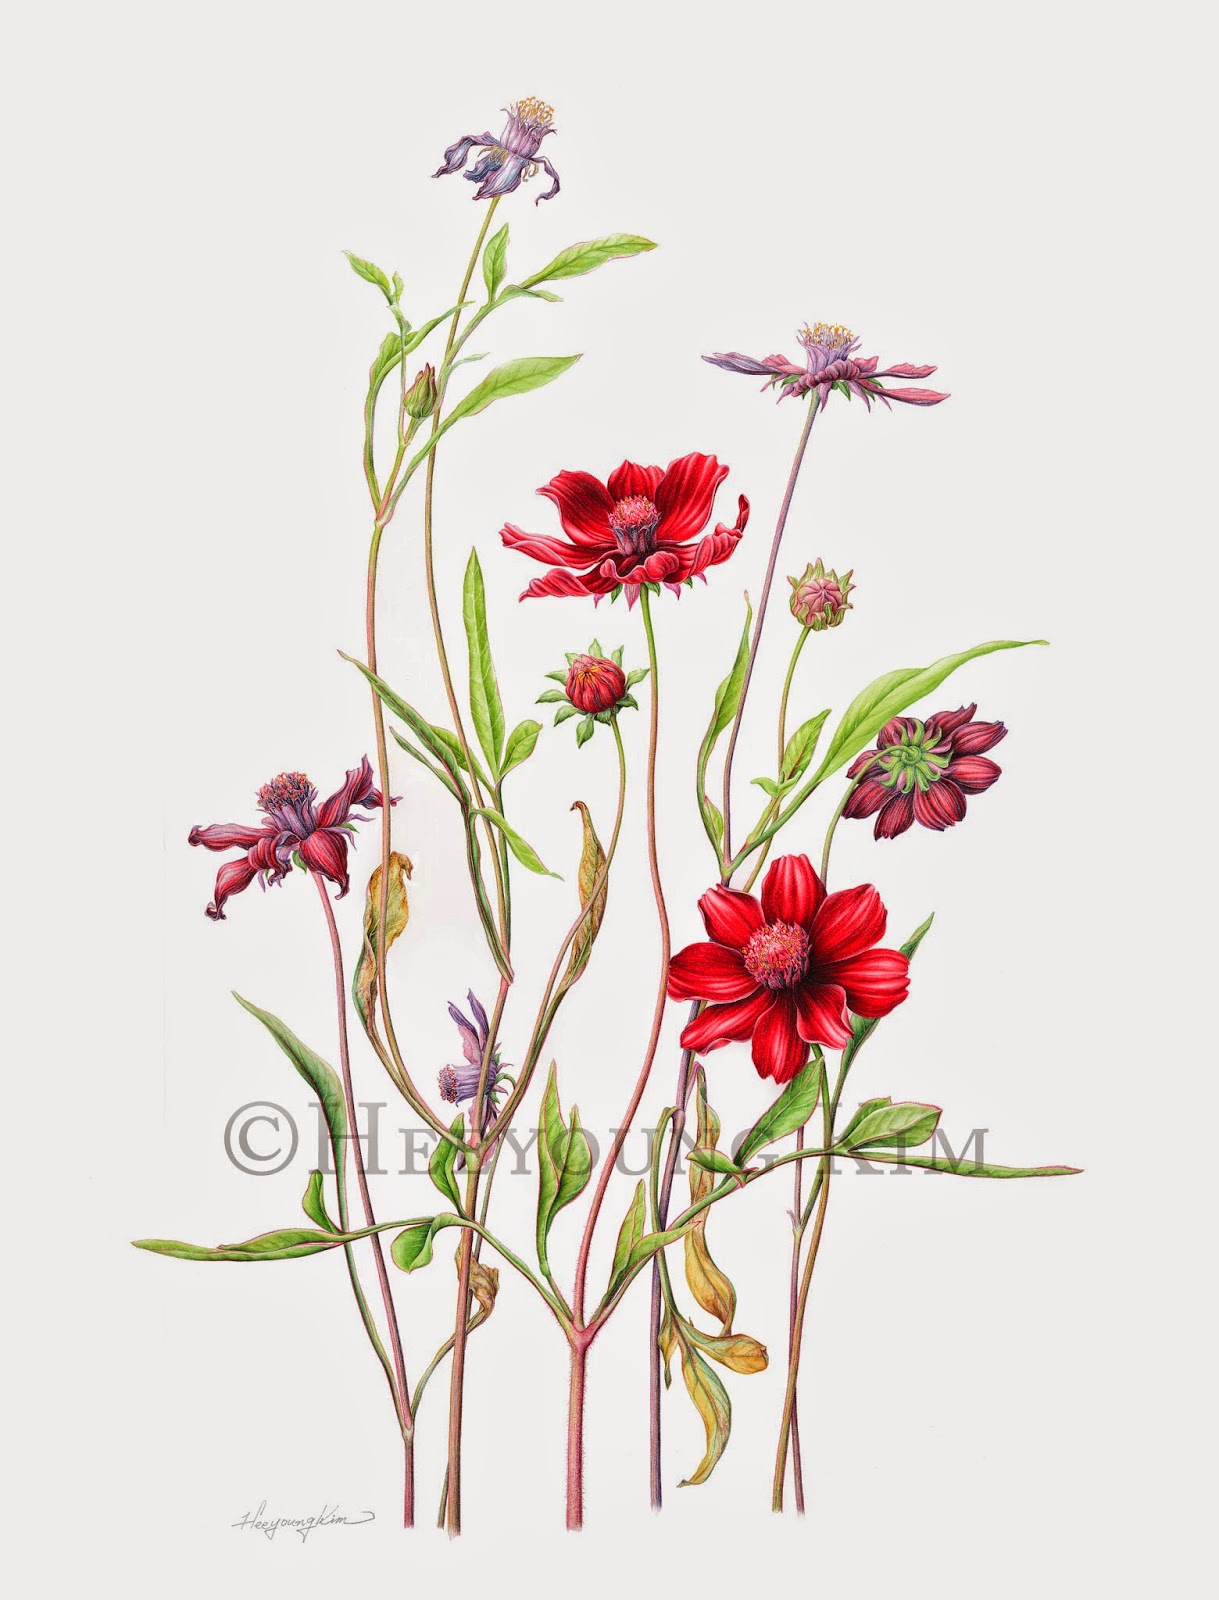 Cosmos Flower Drawing at GetDrawings | Free download